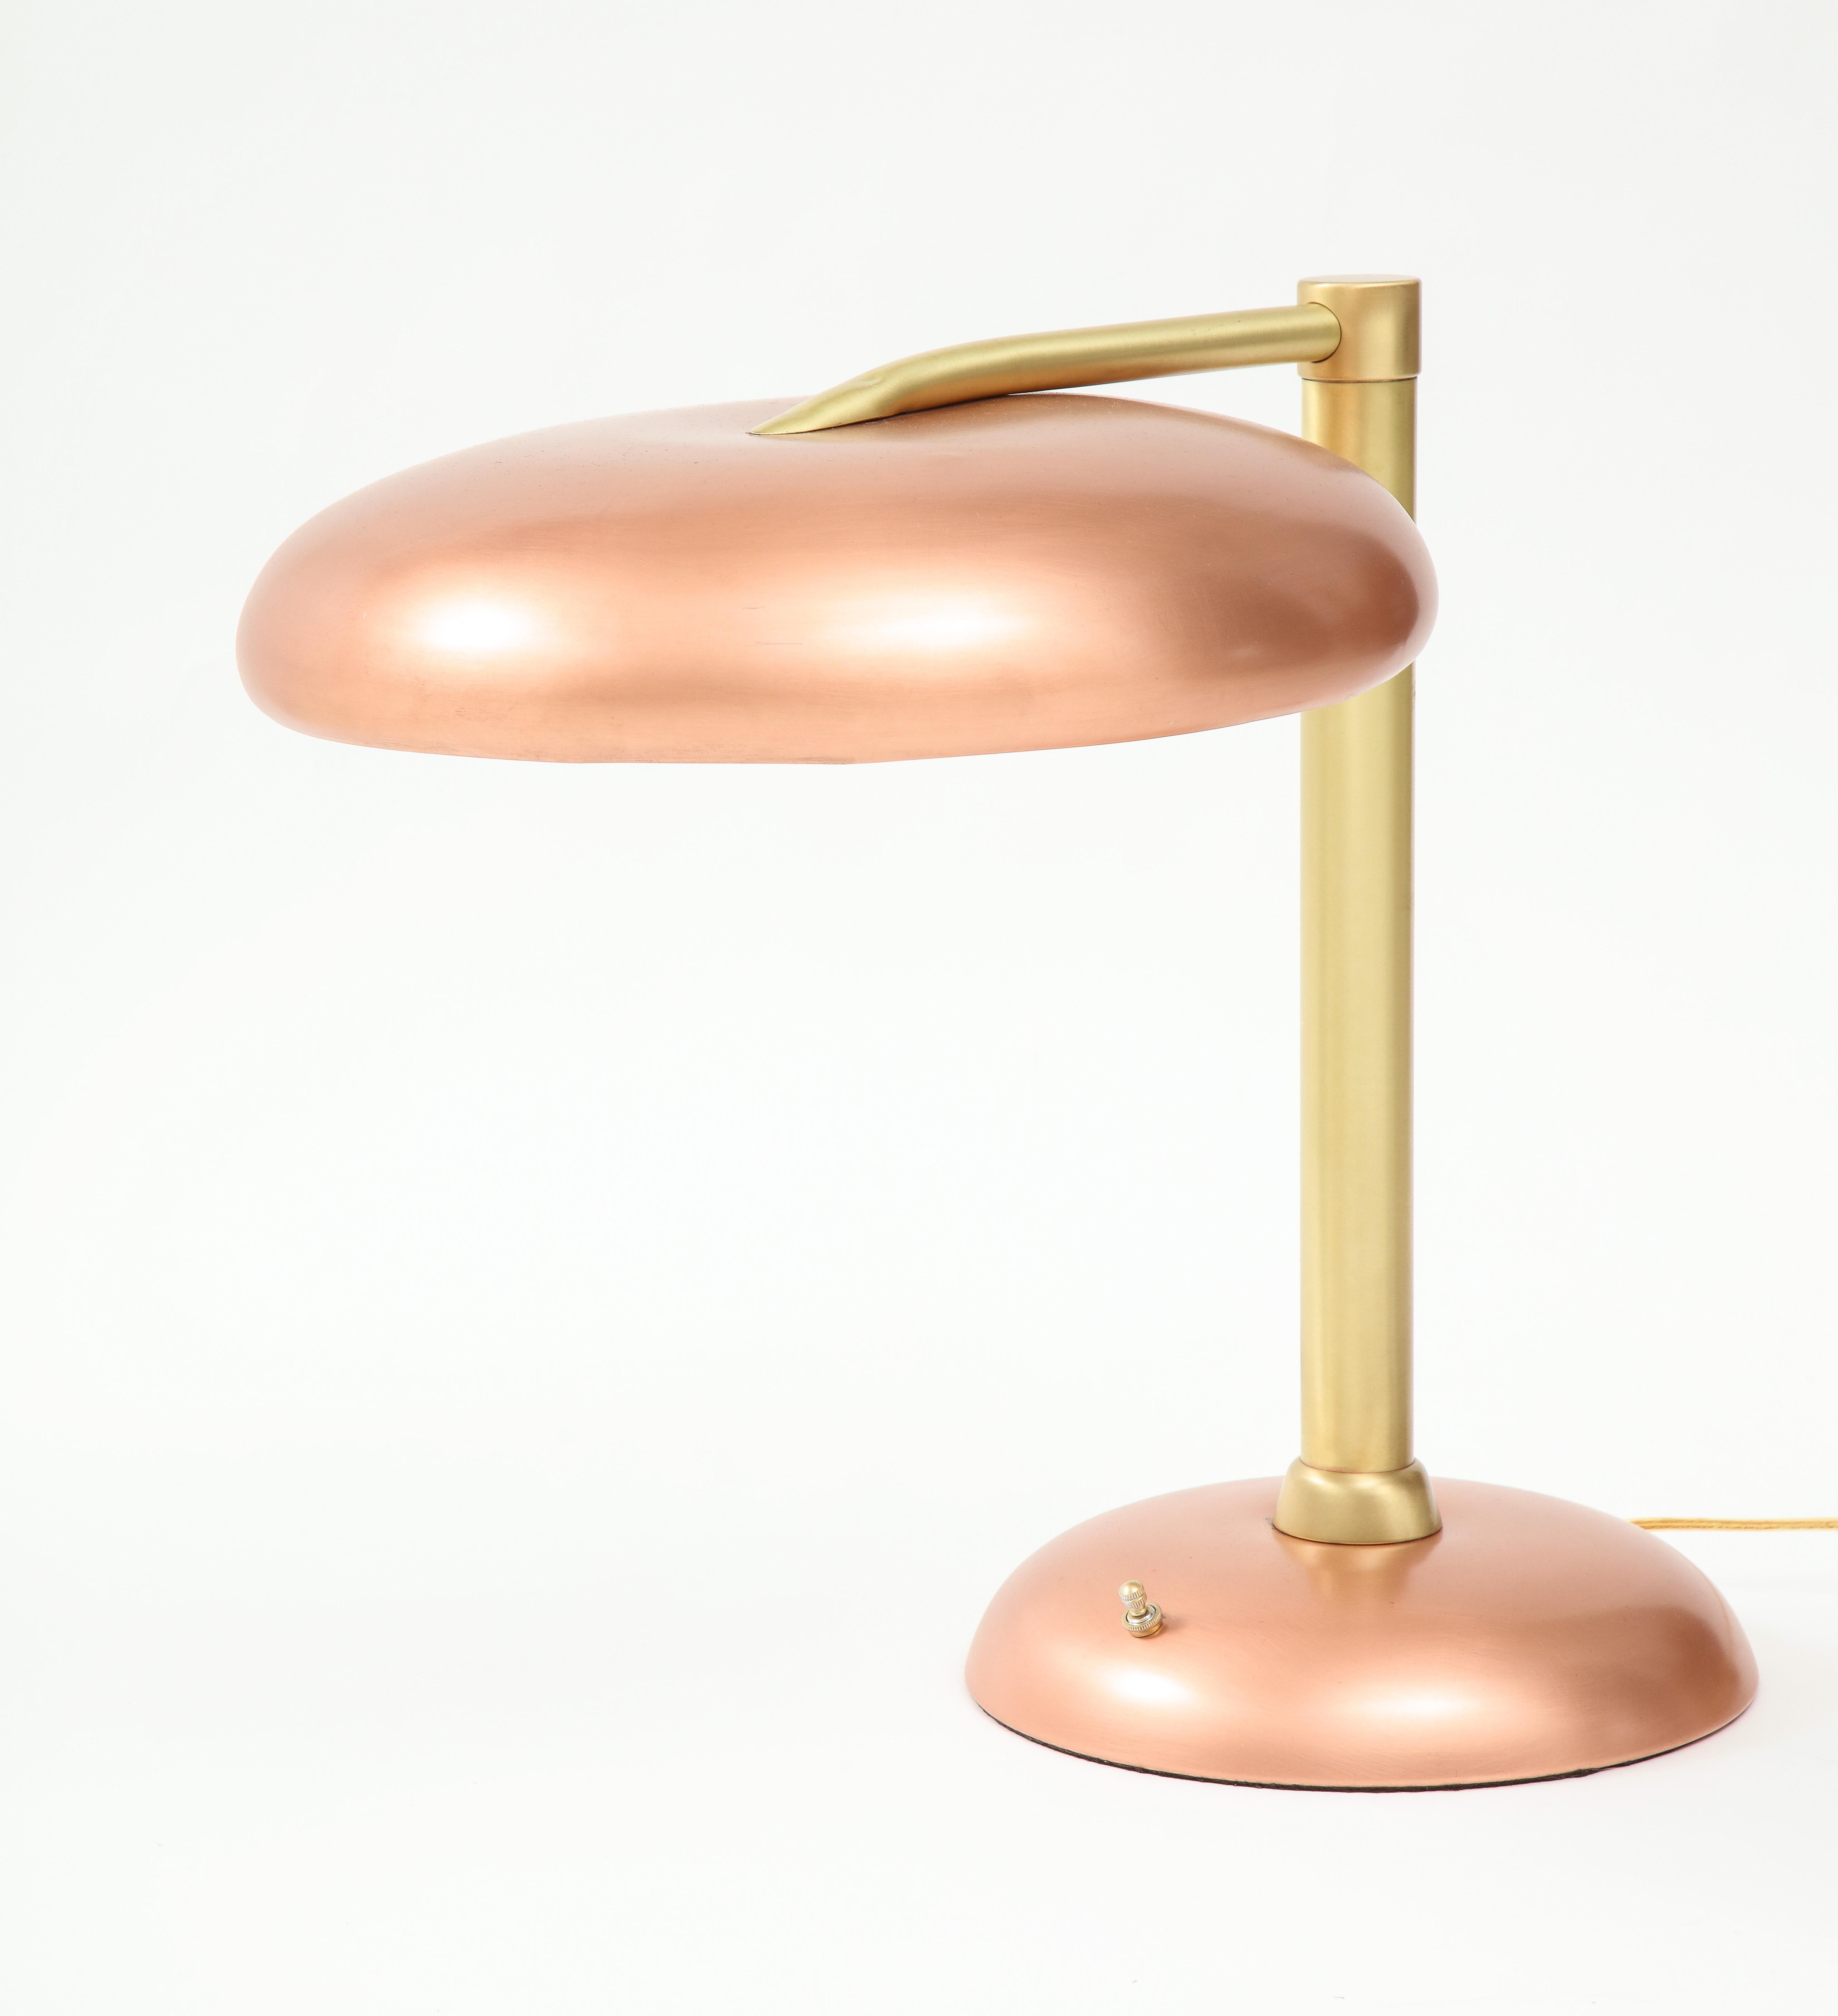 1940s Art Deco Copper and Brass Desk Lamp For Sale 1